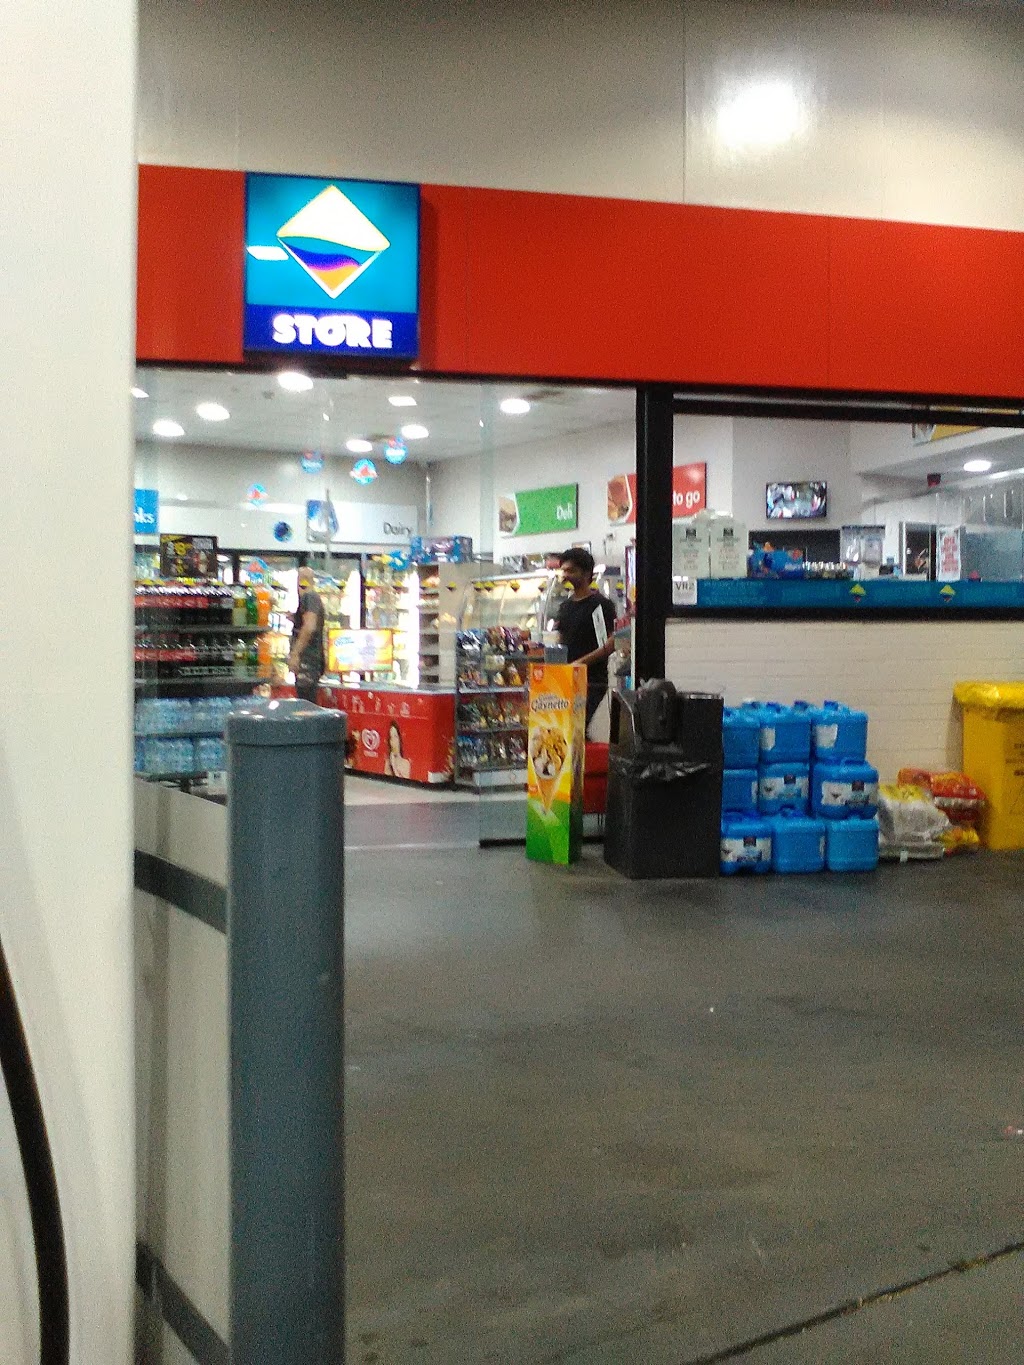 Budget Petrol | gas station | 208 New Canterbury Rd, Lewisham NSW 2049, Australia | 0295641401 OR +61 2 9564 1401